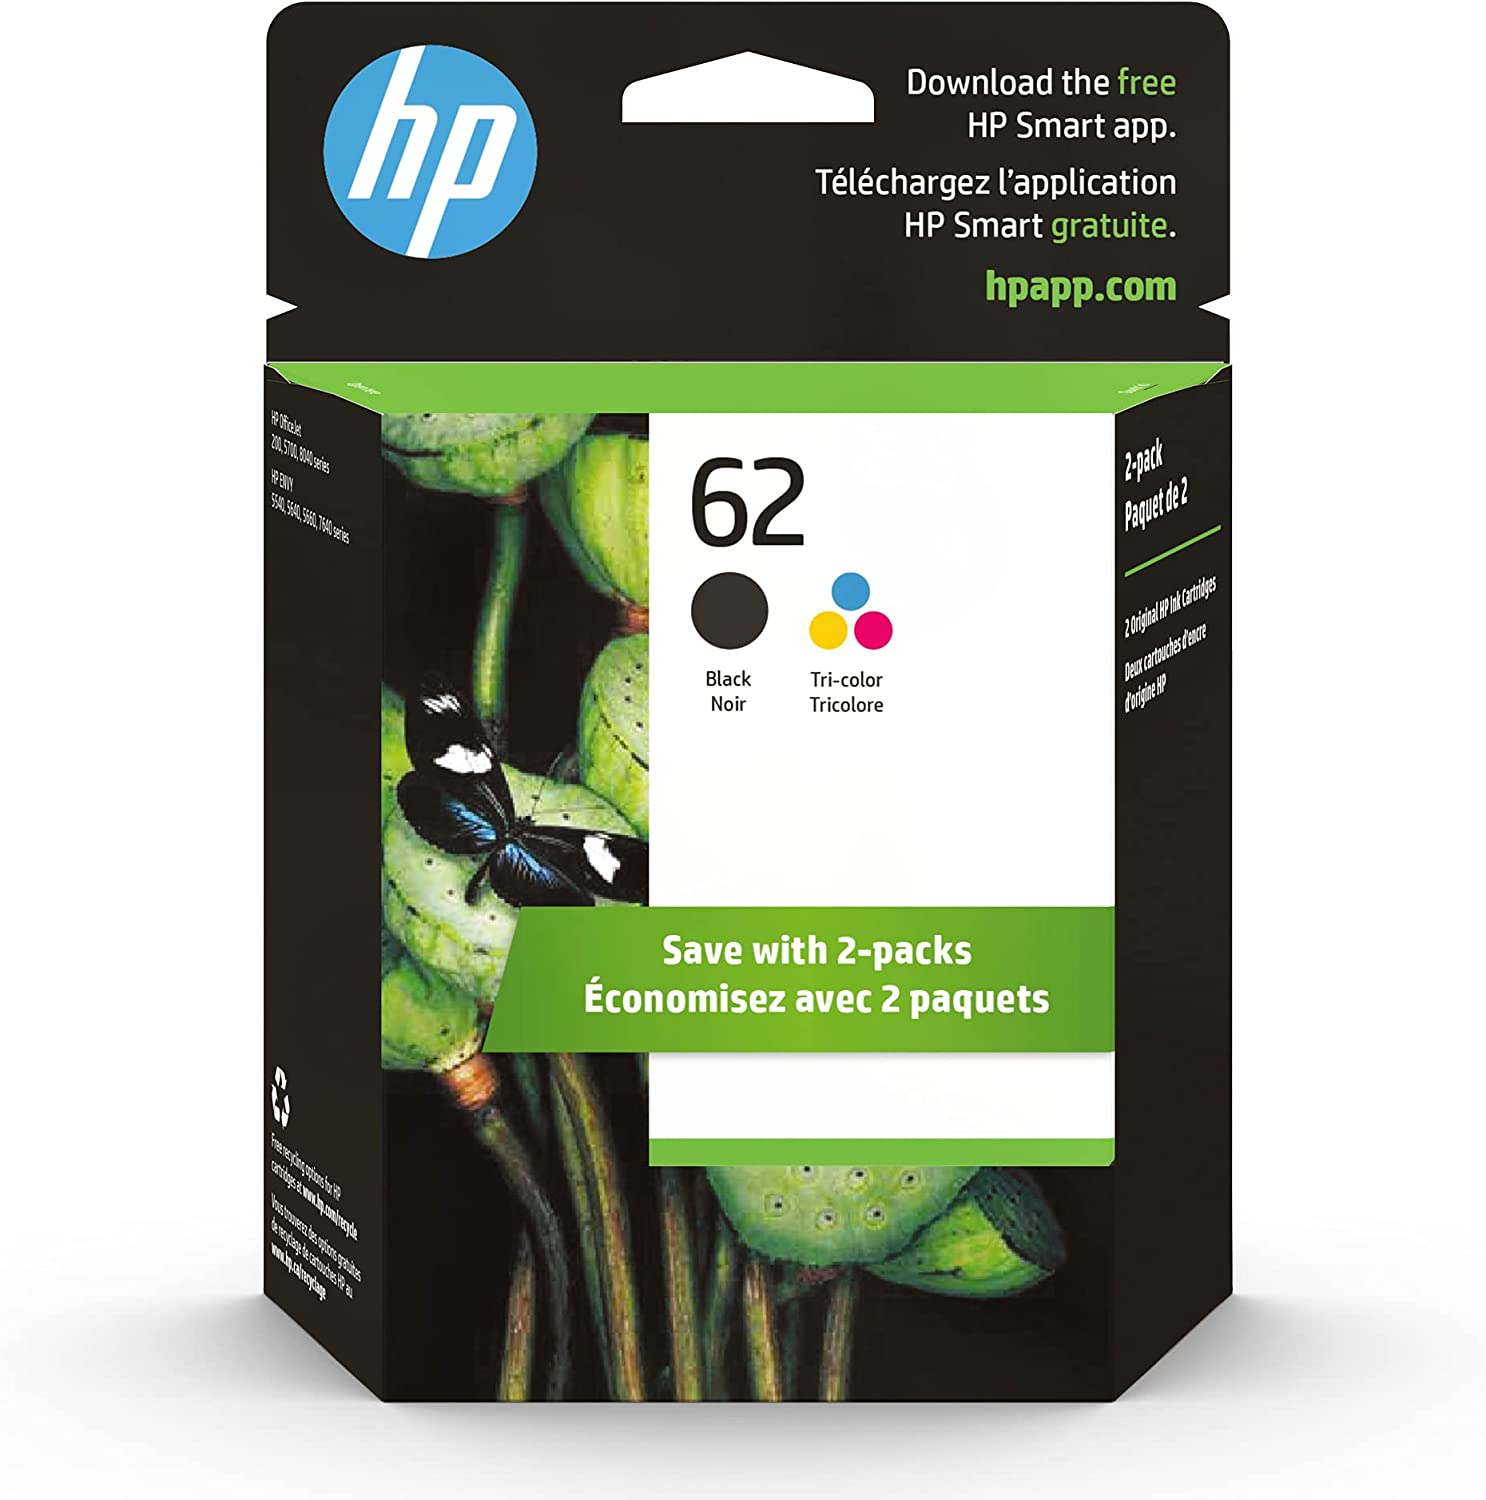 HP 62 블랙/트리컬러 잉크 (2팩) | HP ENVY 5540, 5640, 5660, 7640 시리즈, HP OfficeJet 5740, 8040 시리즈, HP OfficeJet Mobile 200, 250 시리즈 | 인스턴트 잉크 대상 | N9H64FN